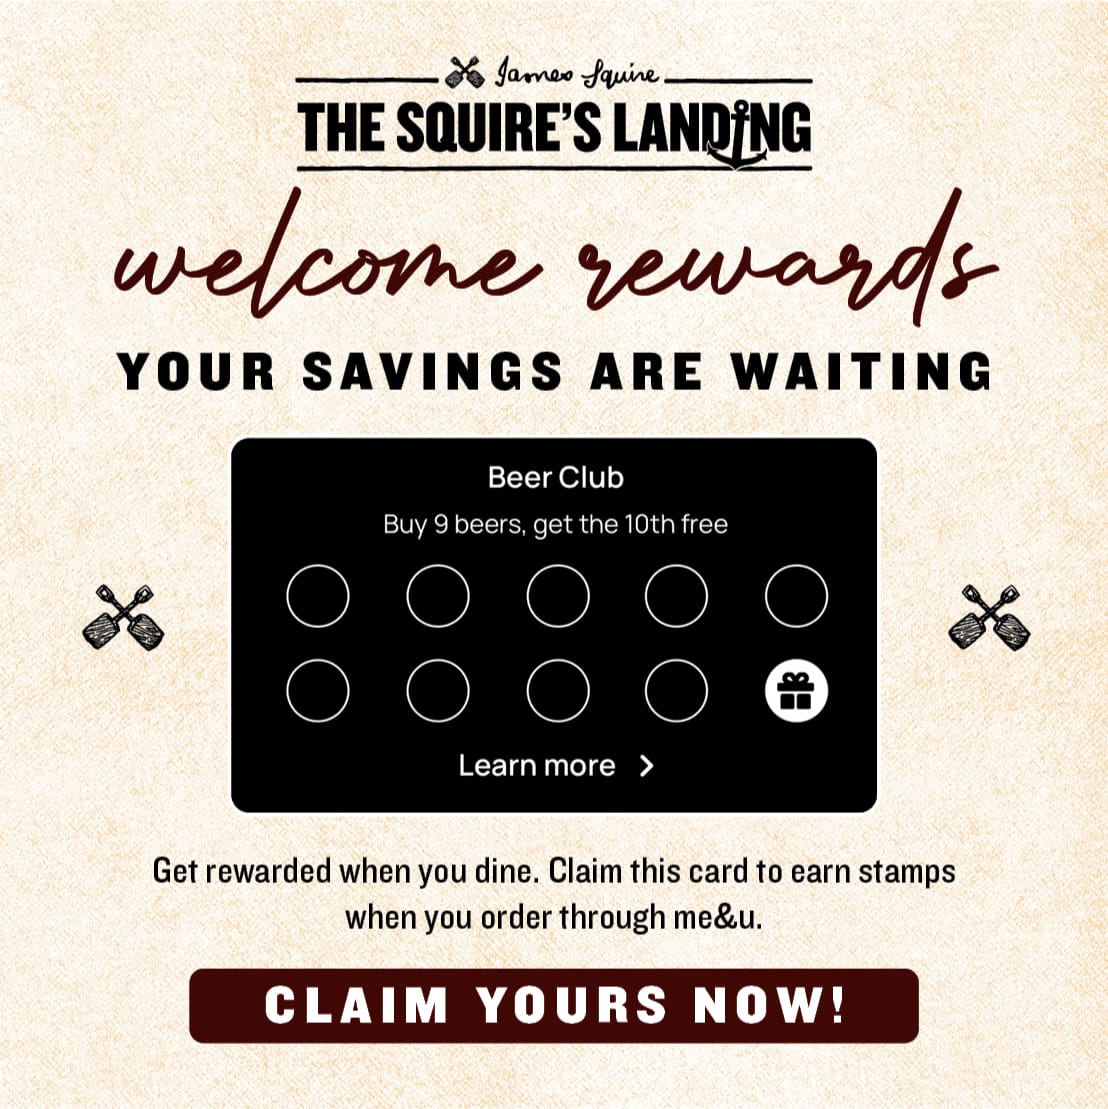 A Squire's Landing rewards stamp card